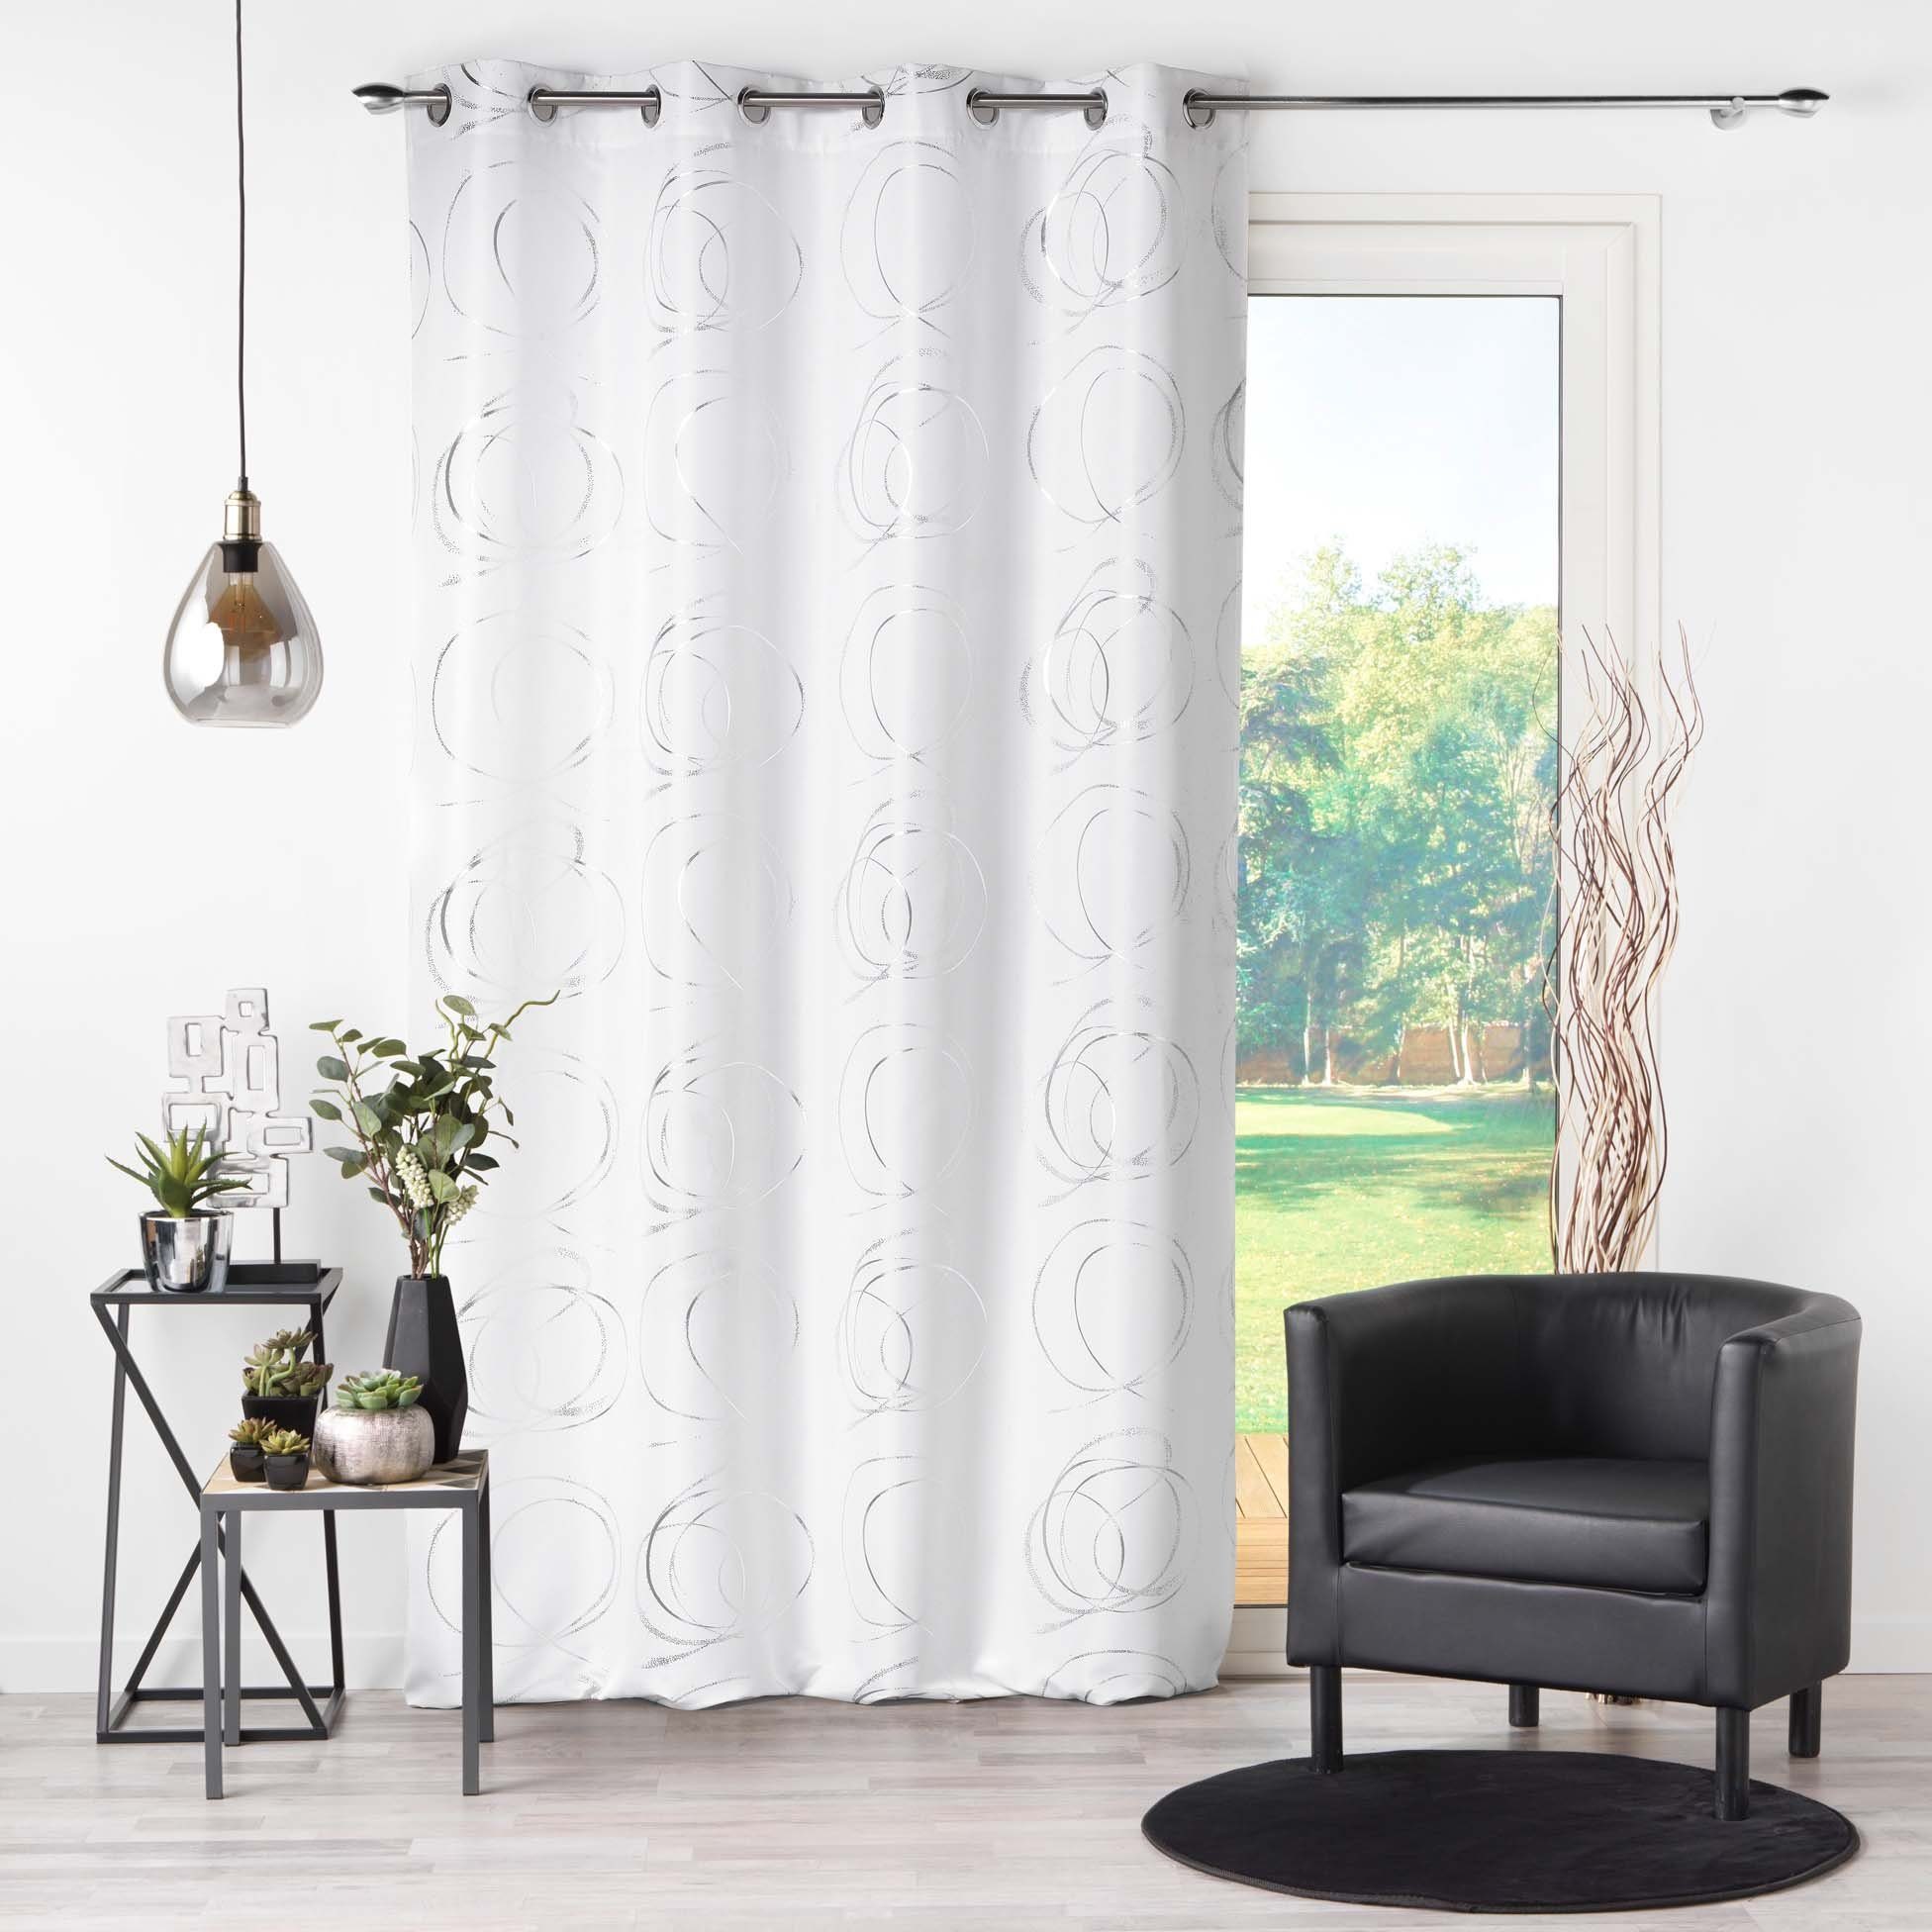 Vorhang, dynamic24, Ösen, halbtransparent, Ösenschal 140x260cm Gardine Schal bedruckt halbtransparent weiß weiss